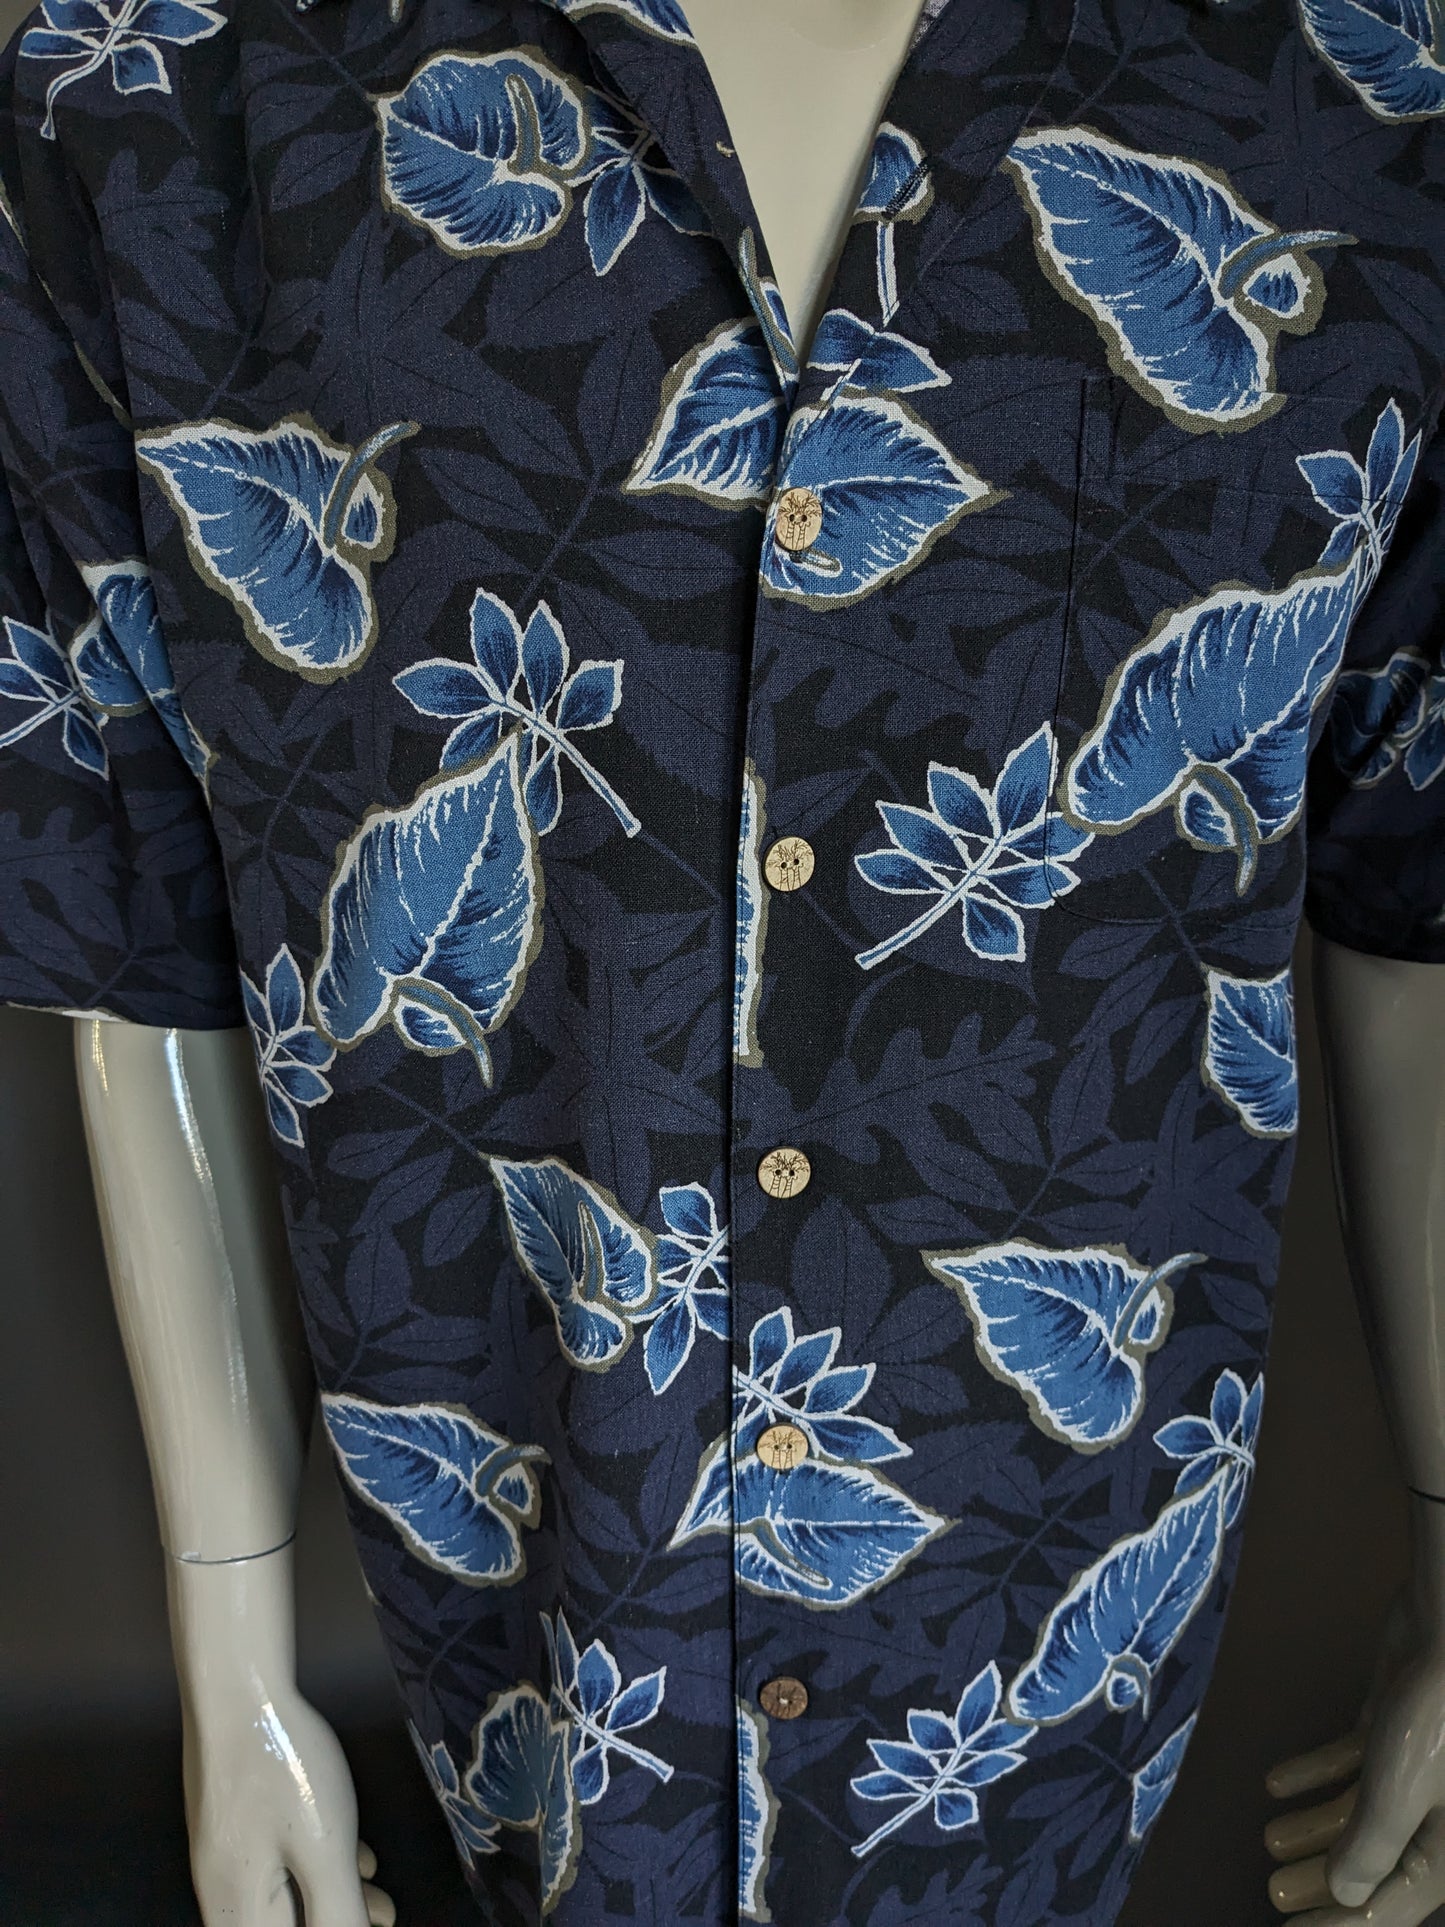 Paradise Blue Seide Hawaii Hemd Kurzarm. Blaublattmotiv. Größe xl. 70% Seide.